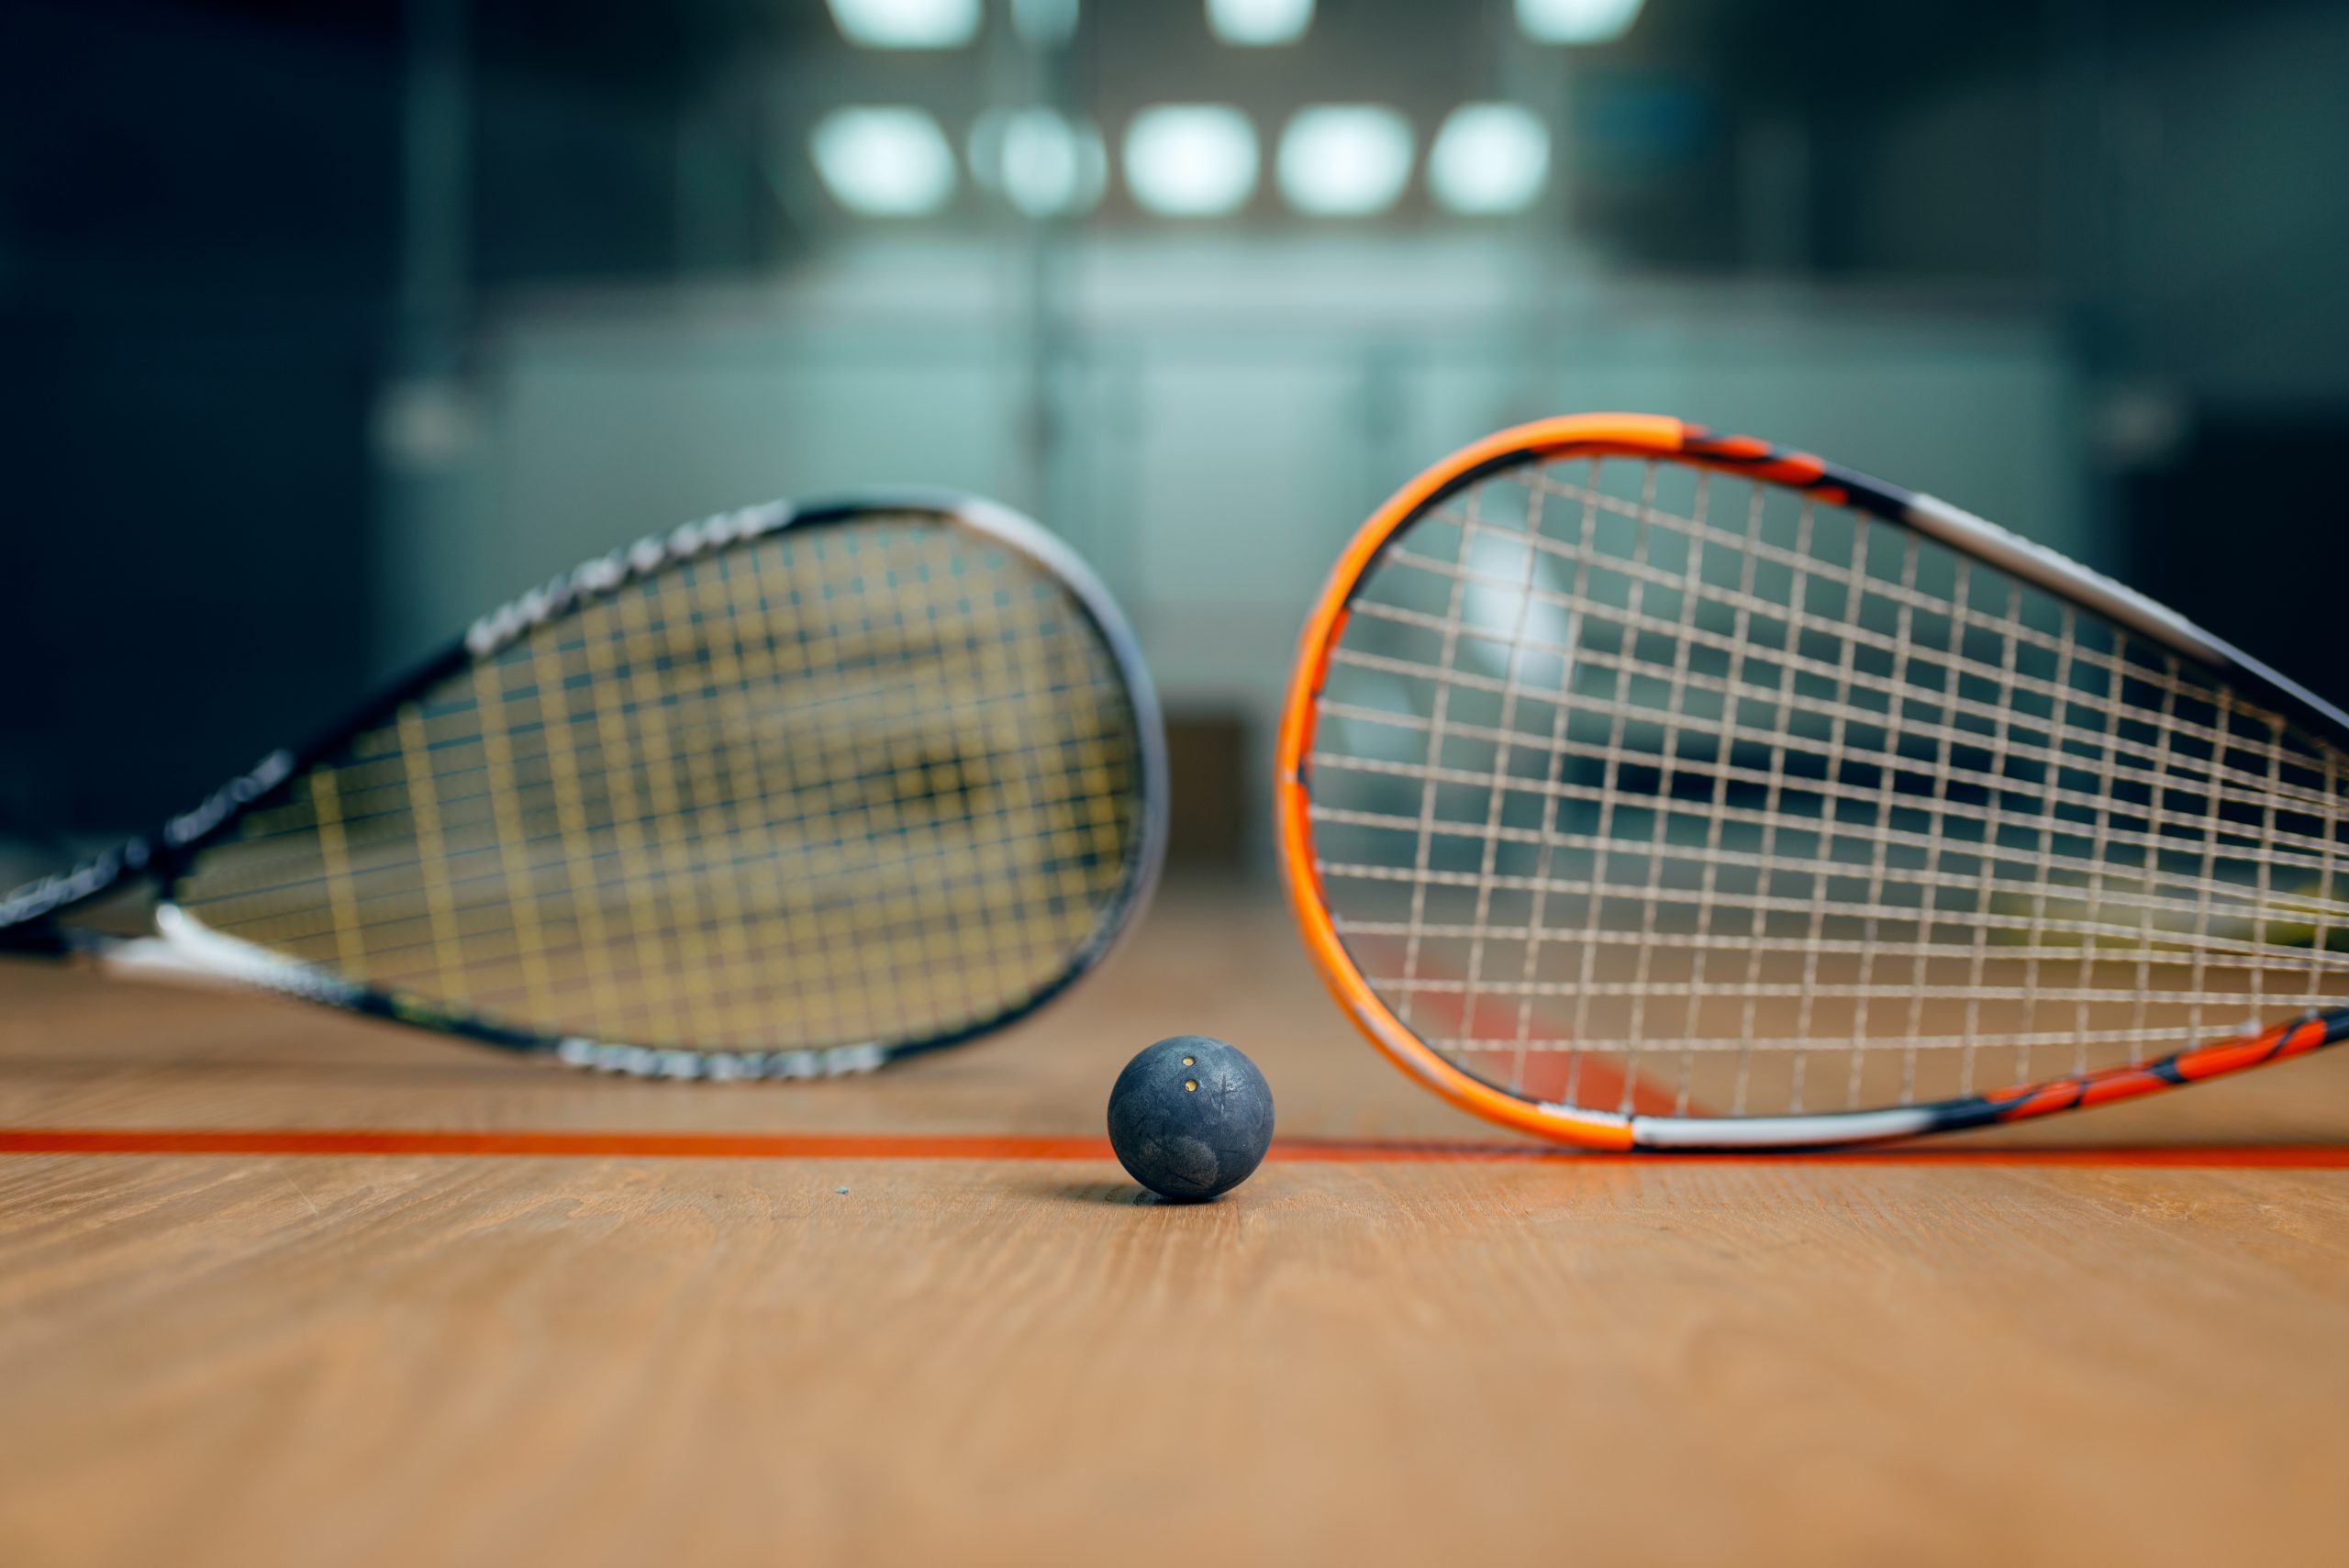 Qatar Classic Squash Tournament to Begin on October 17